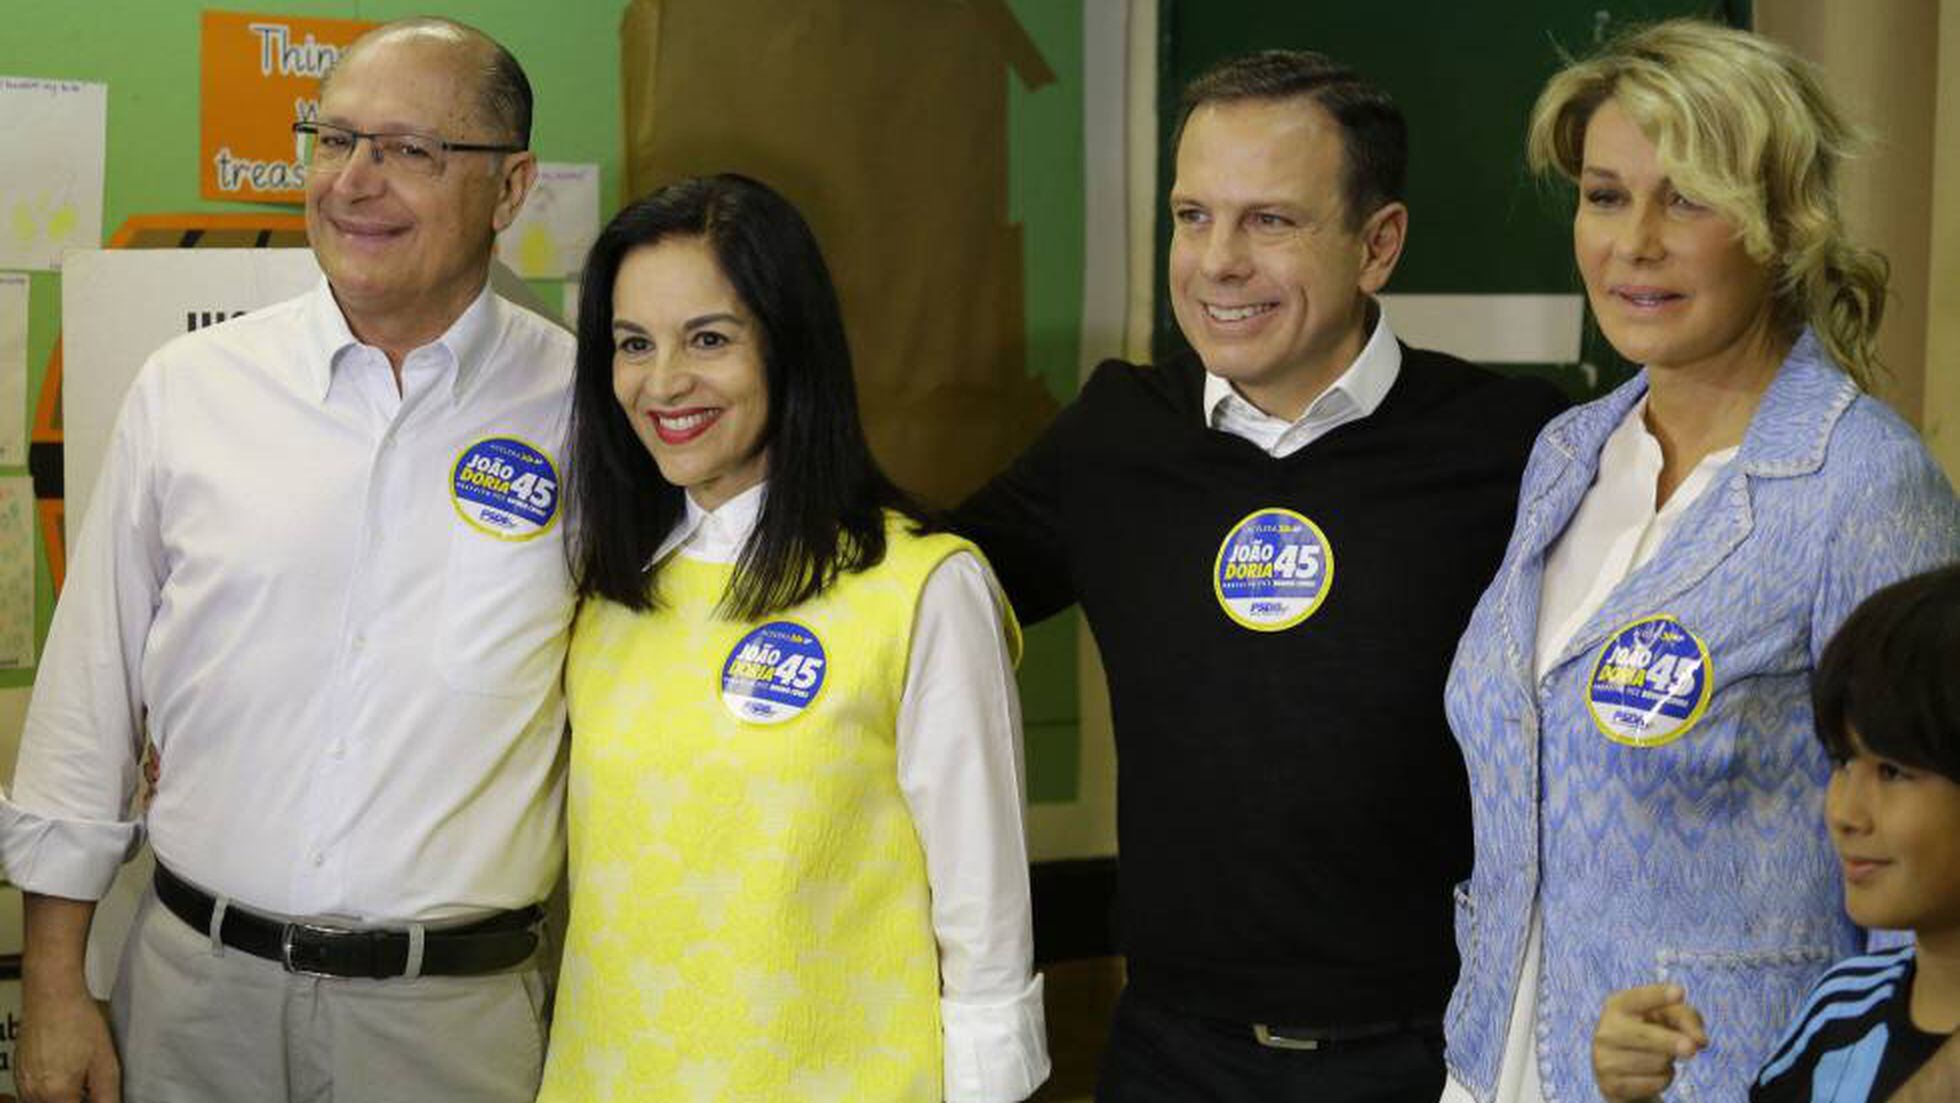 Xadrez eleitoral: o Brasil ganha ou perde?